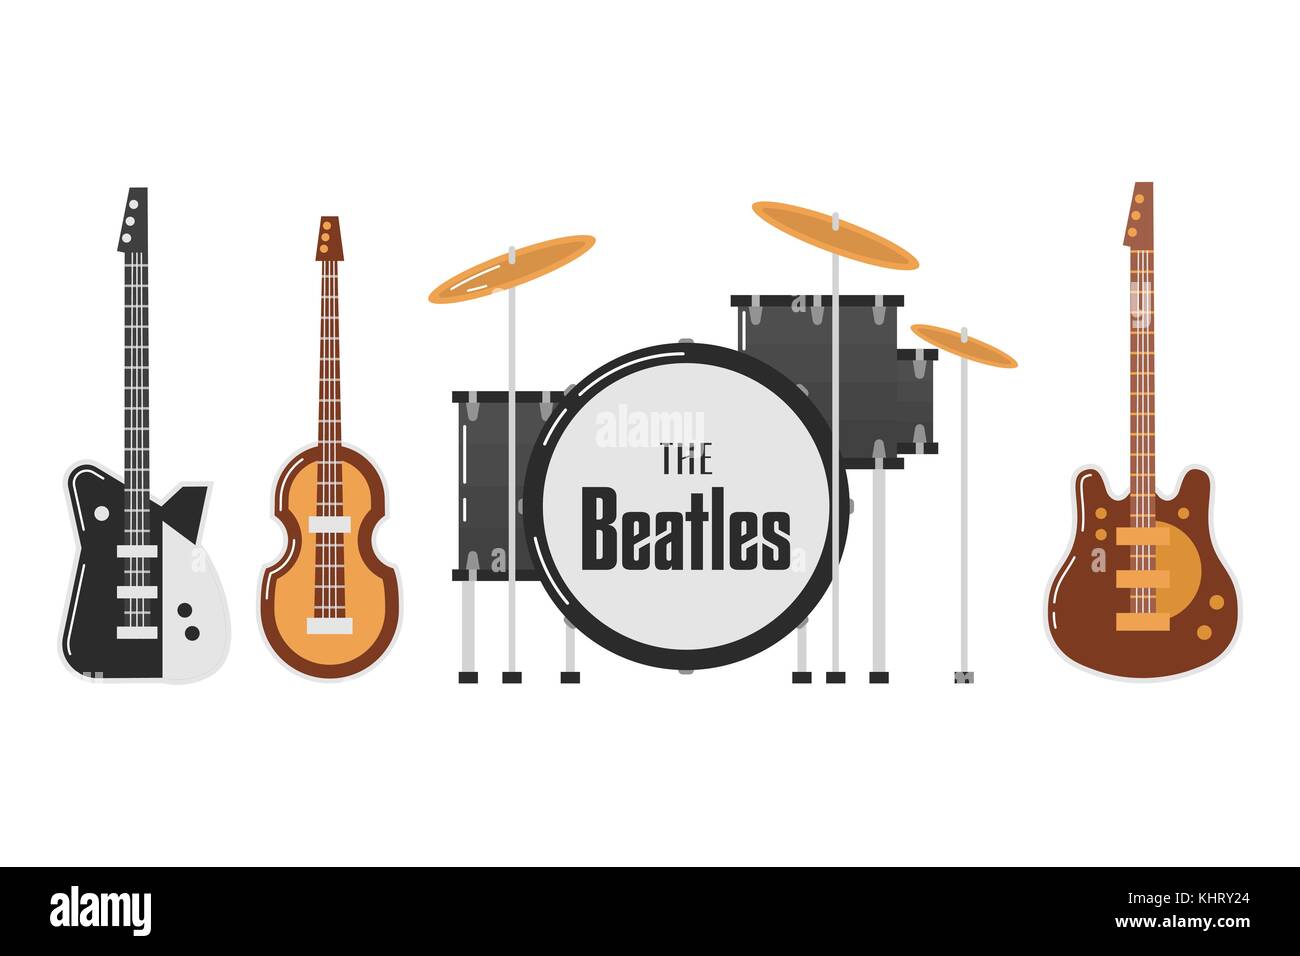 Die Beatles band Themen Stock Vektor